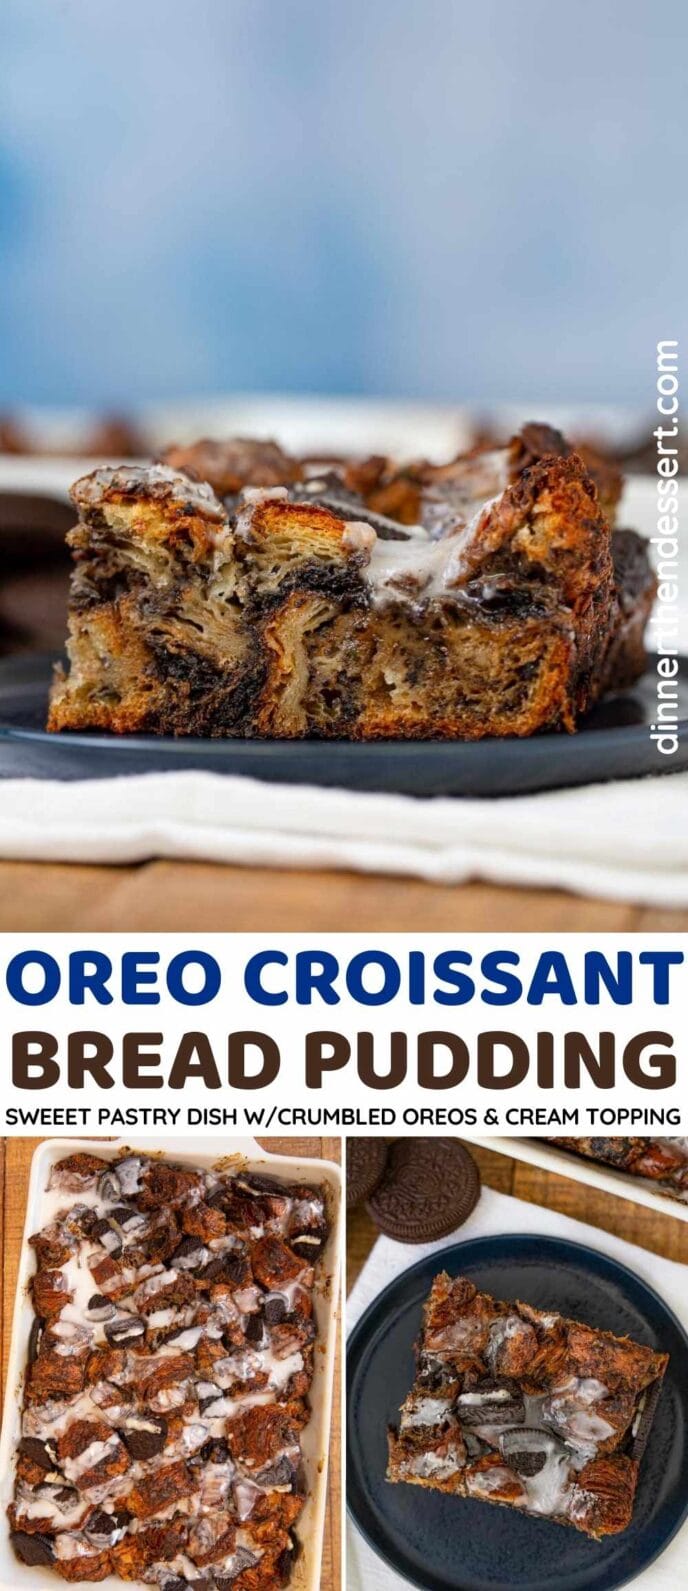 Oreo Croissant Bread Pudding Collage